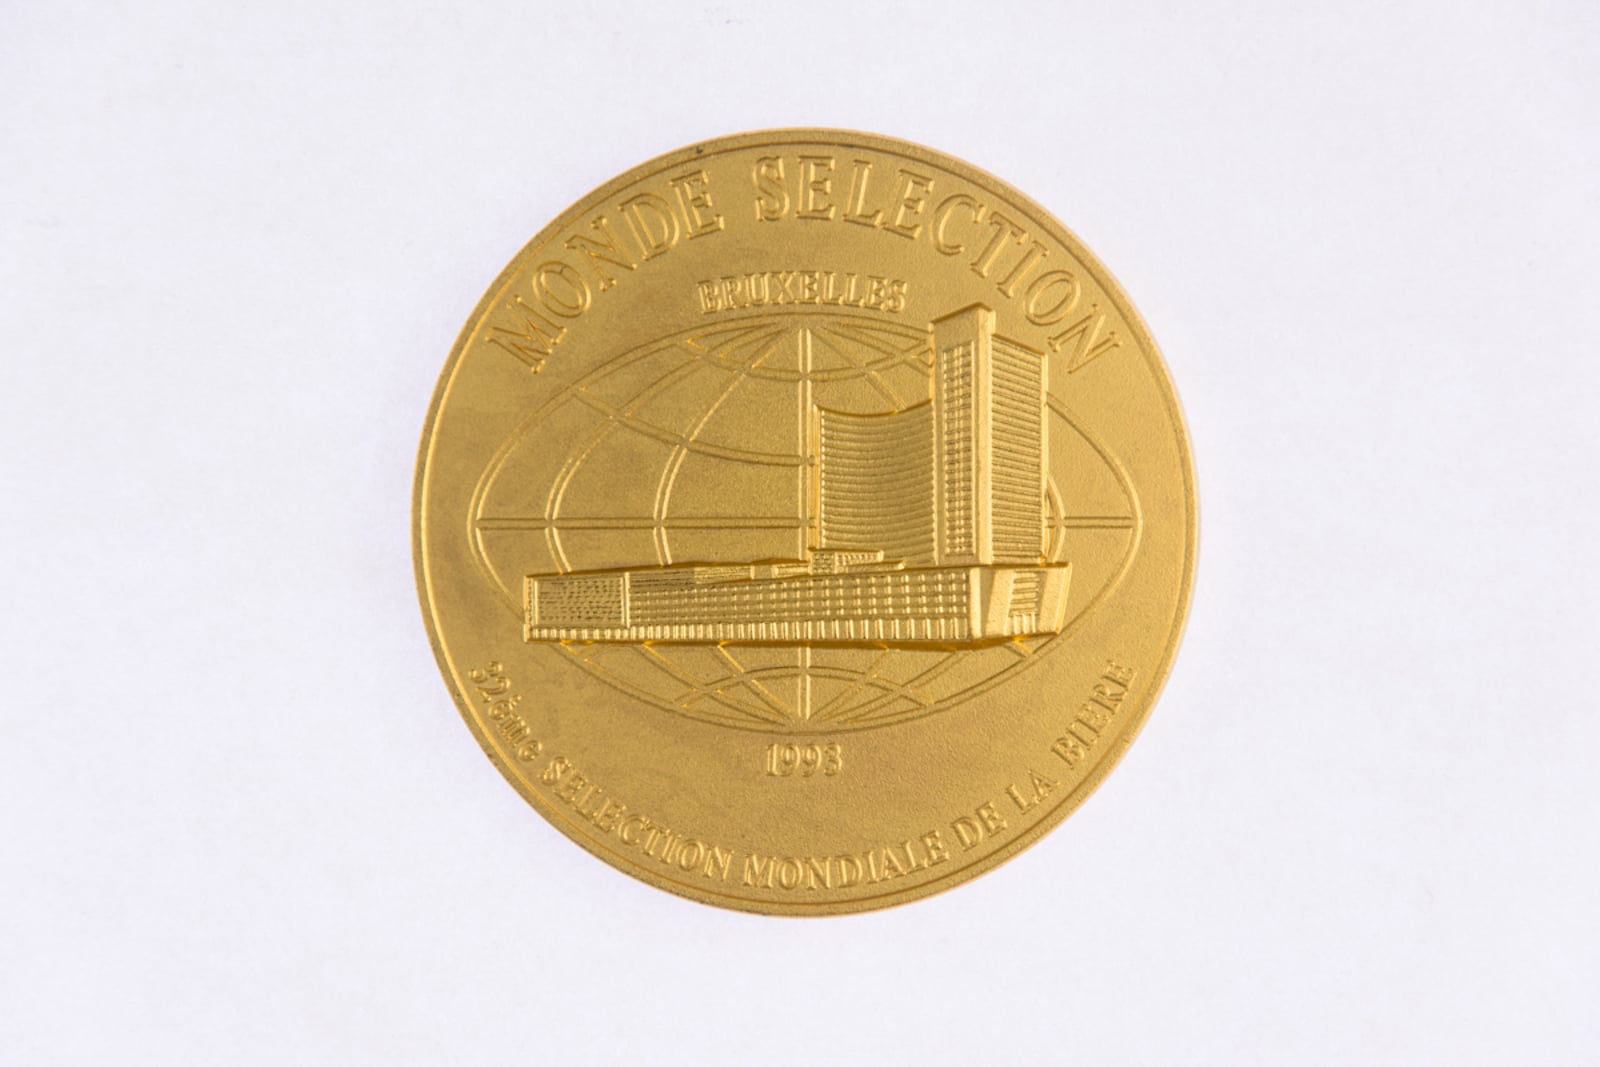 Monde Selection Bruxelles, Medaille d'Or 1993